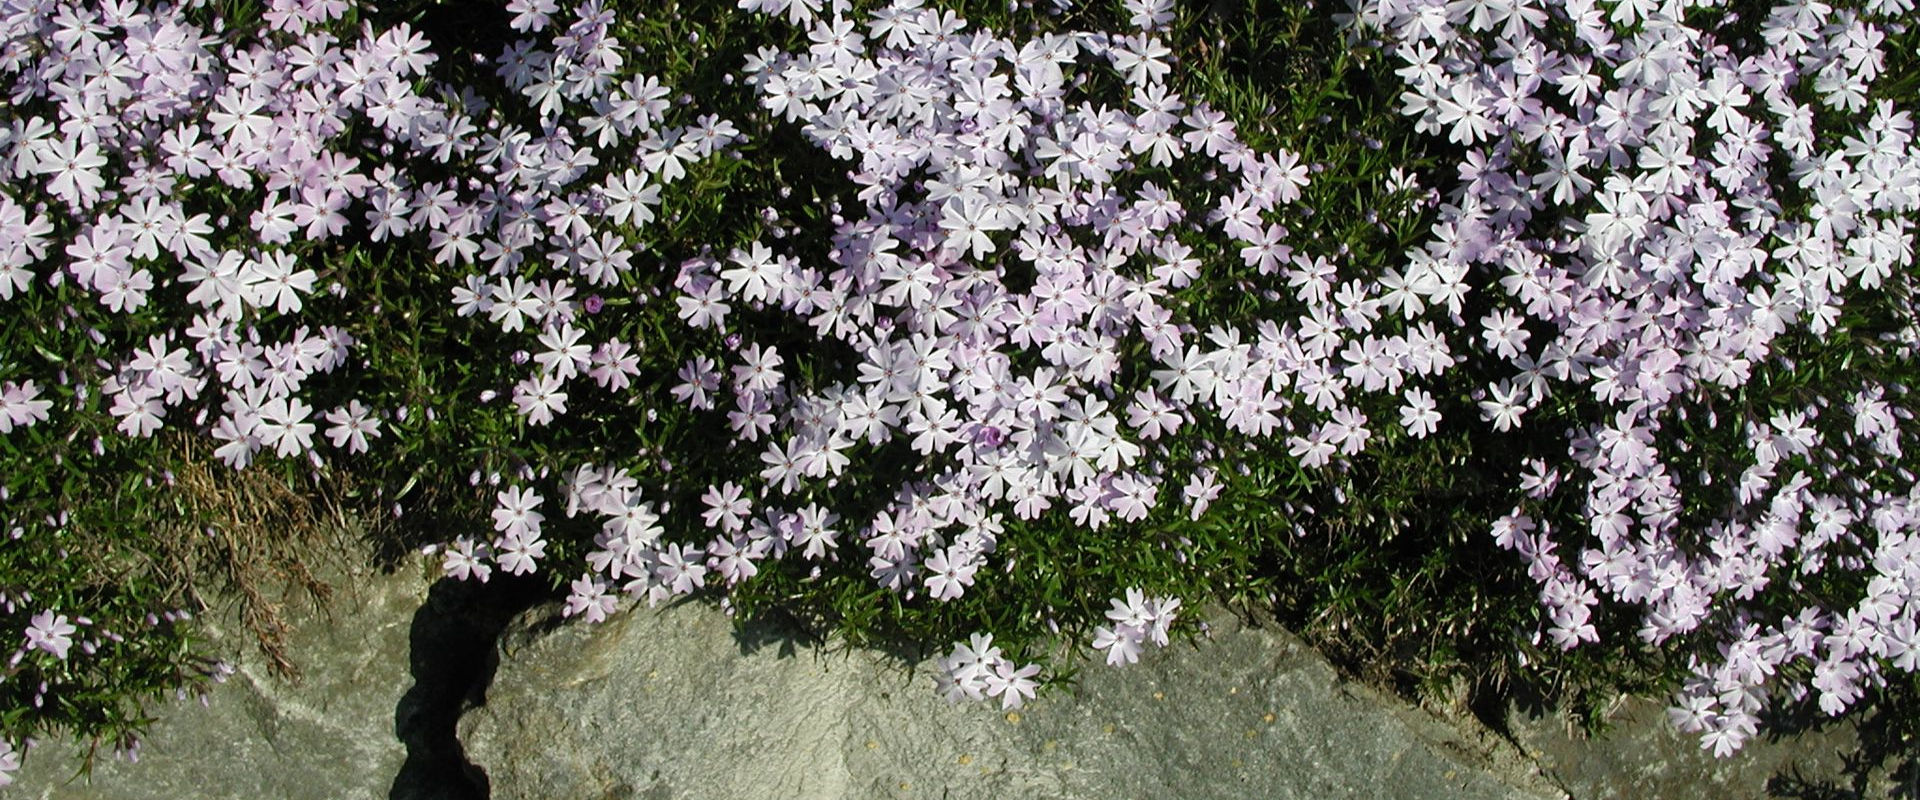 Phlox subulata auf Natursteinmauer